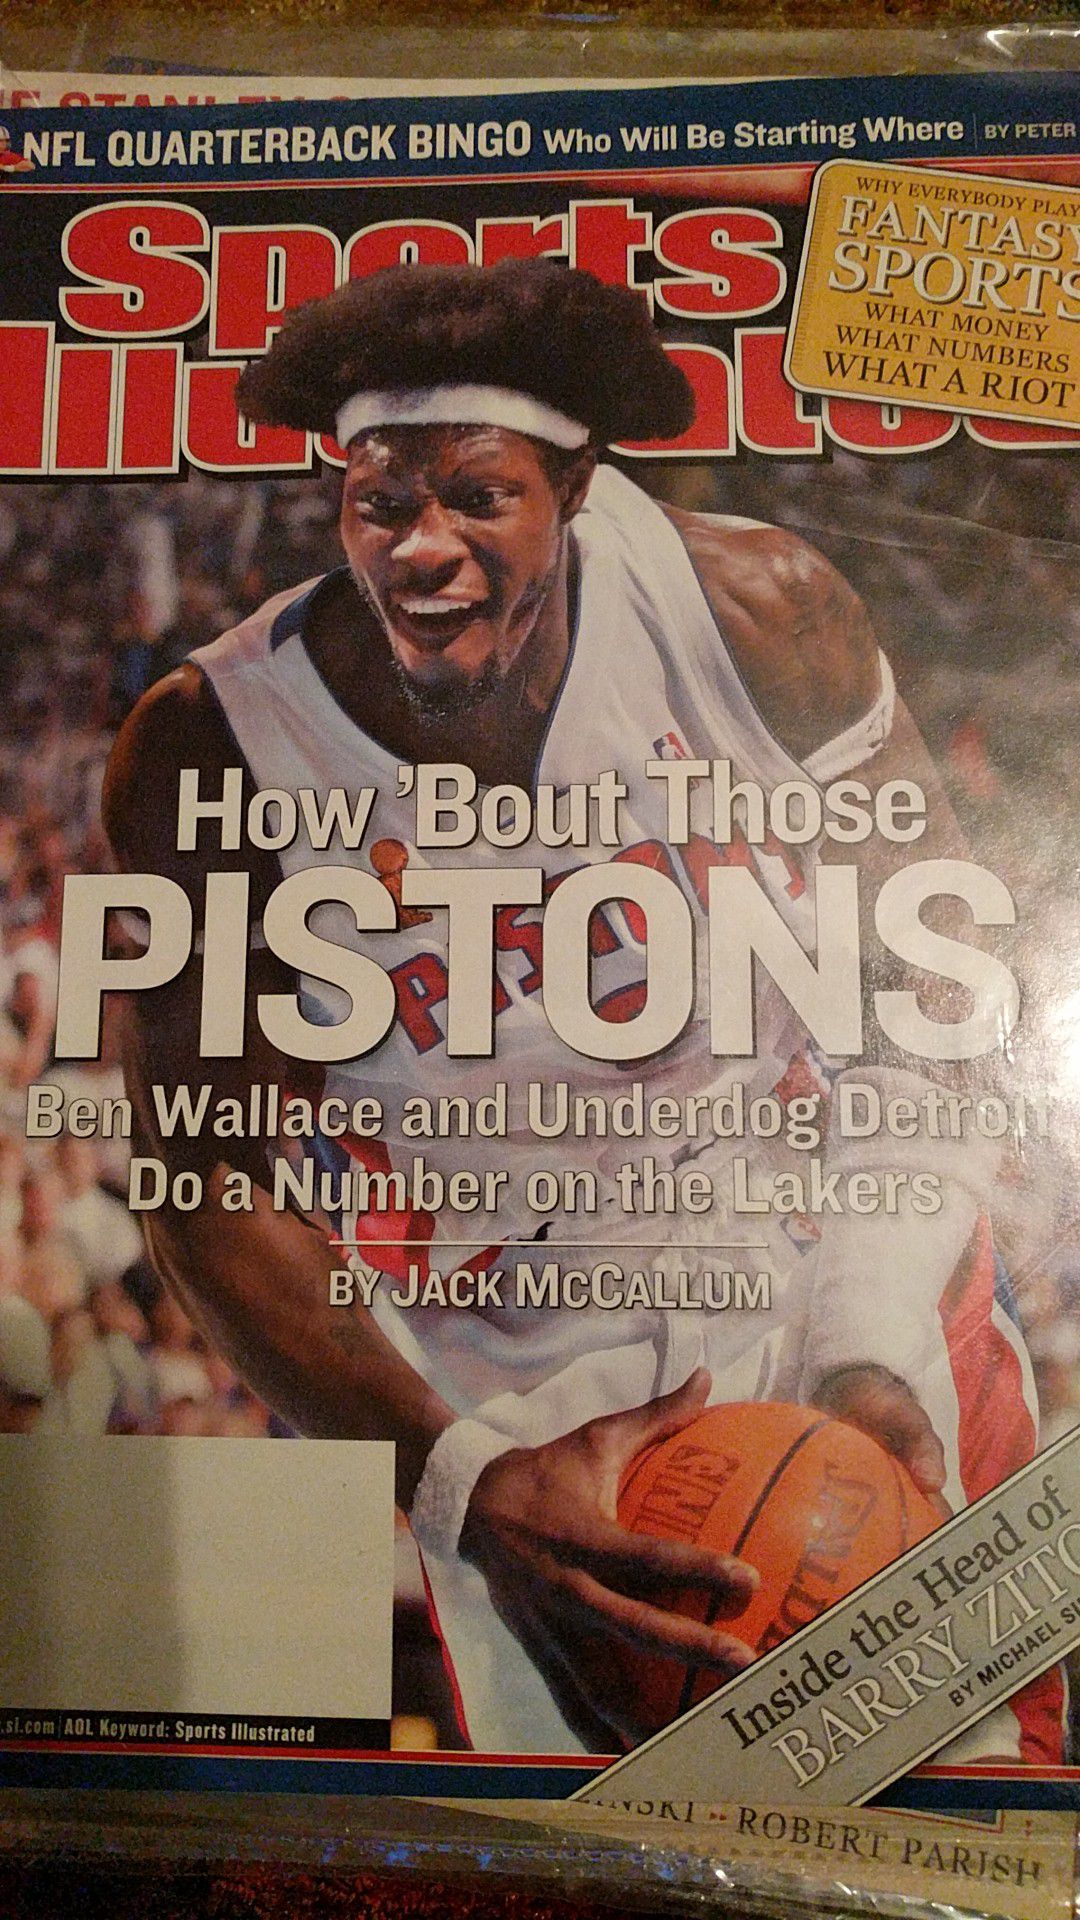 Pistons sports illustrated